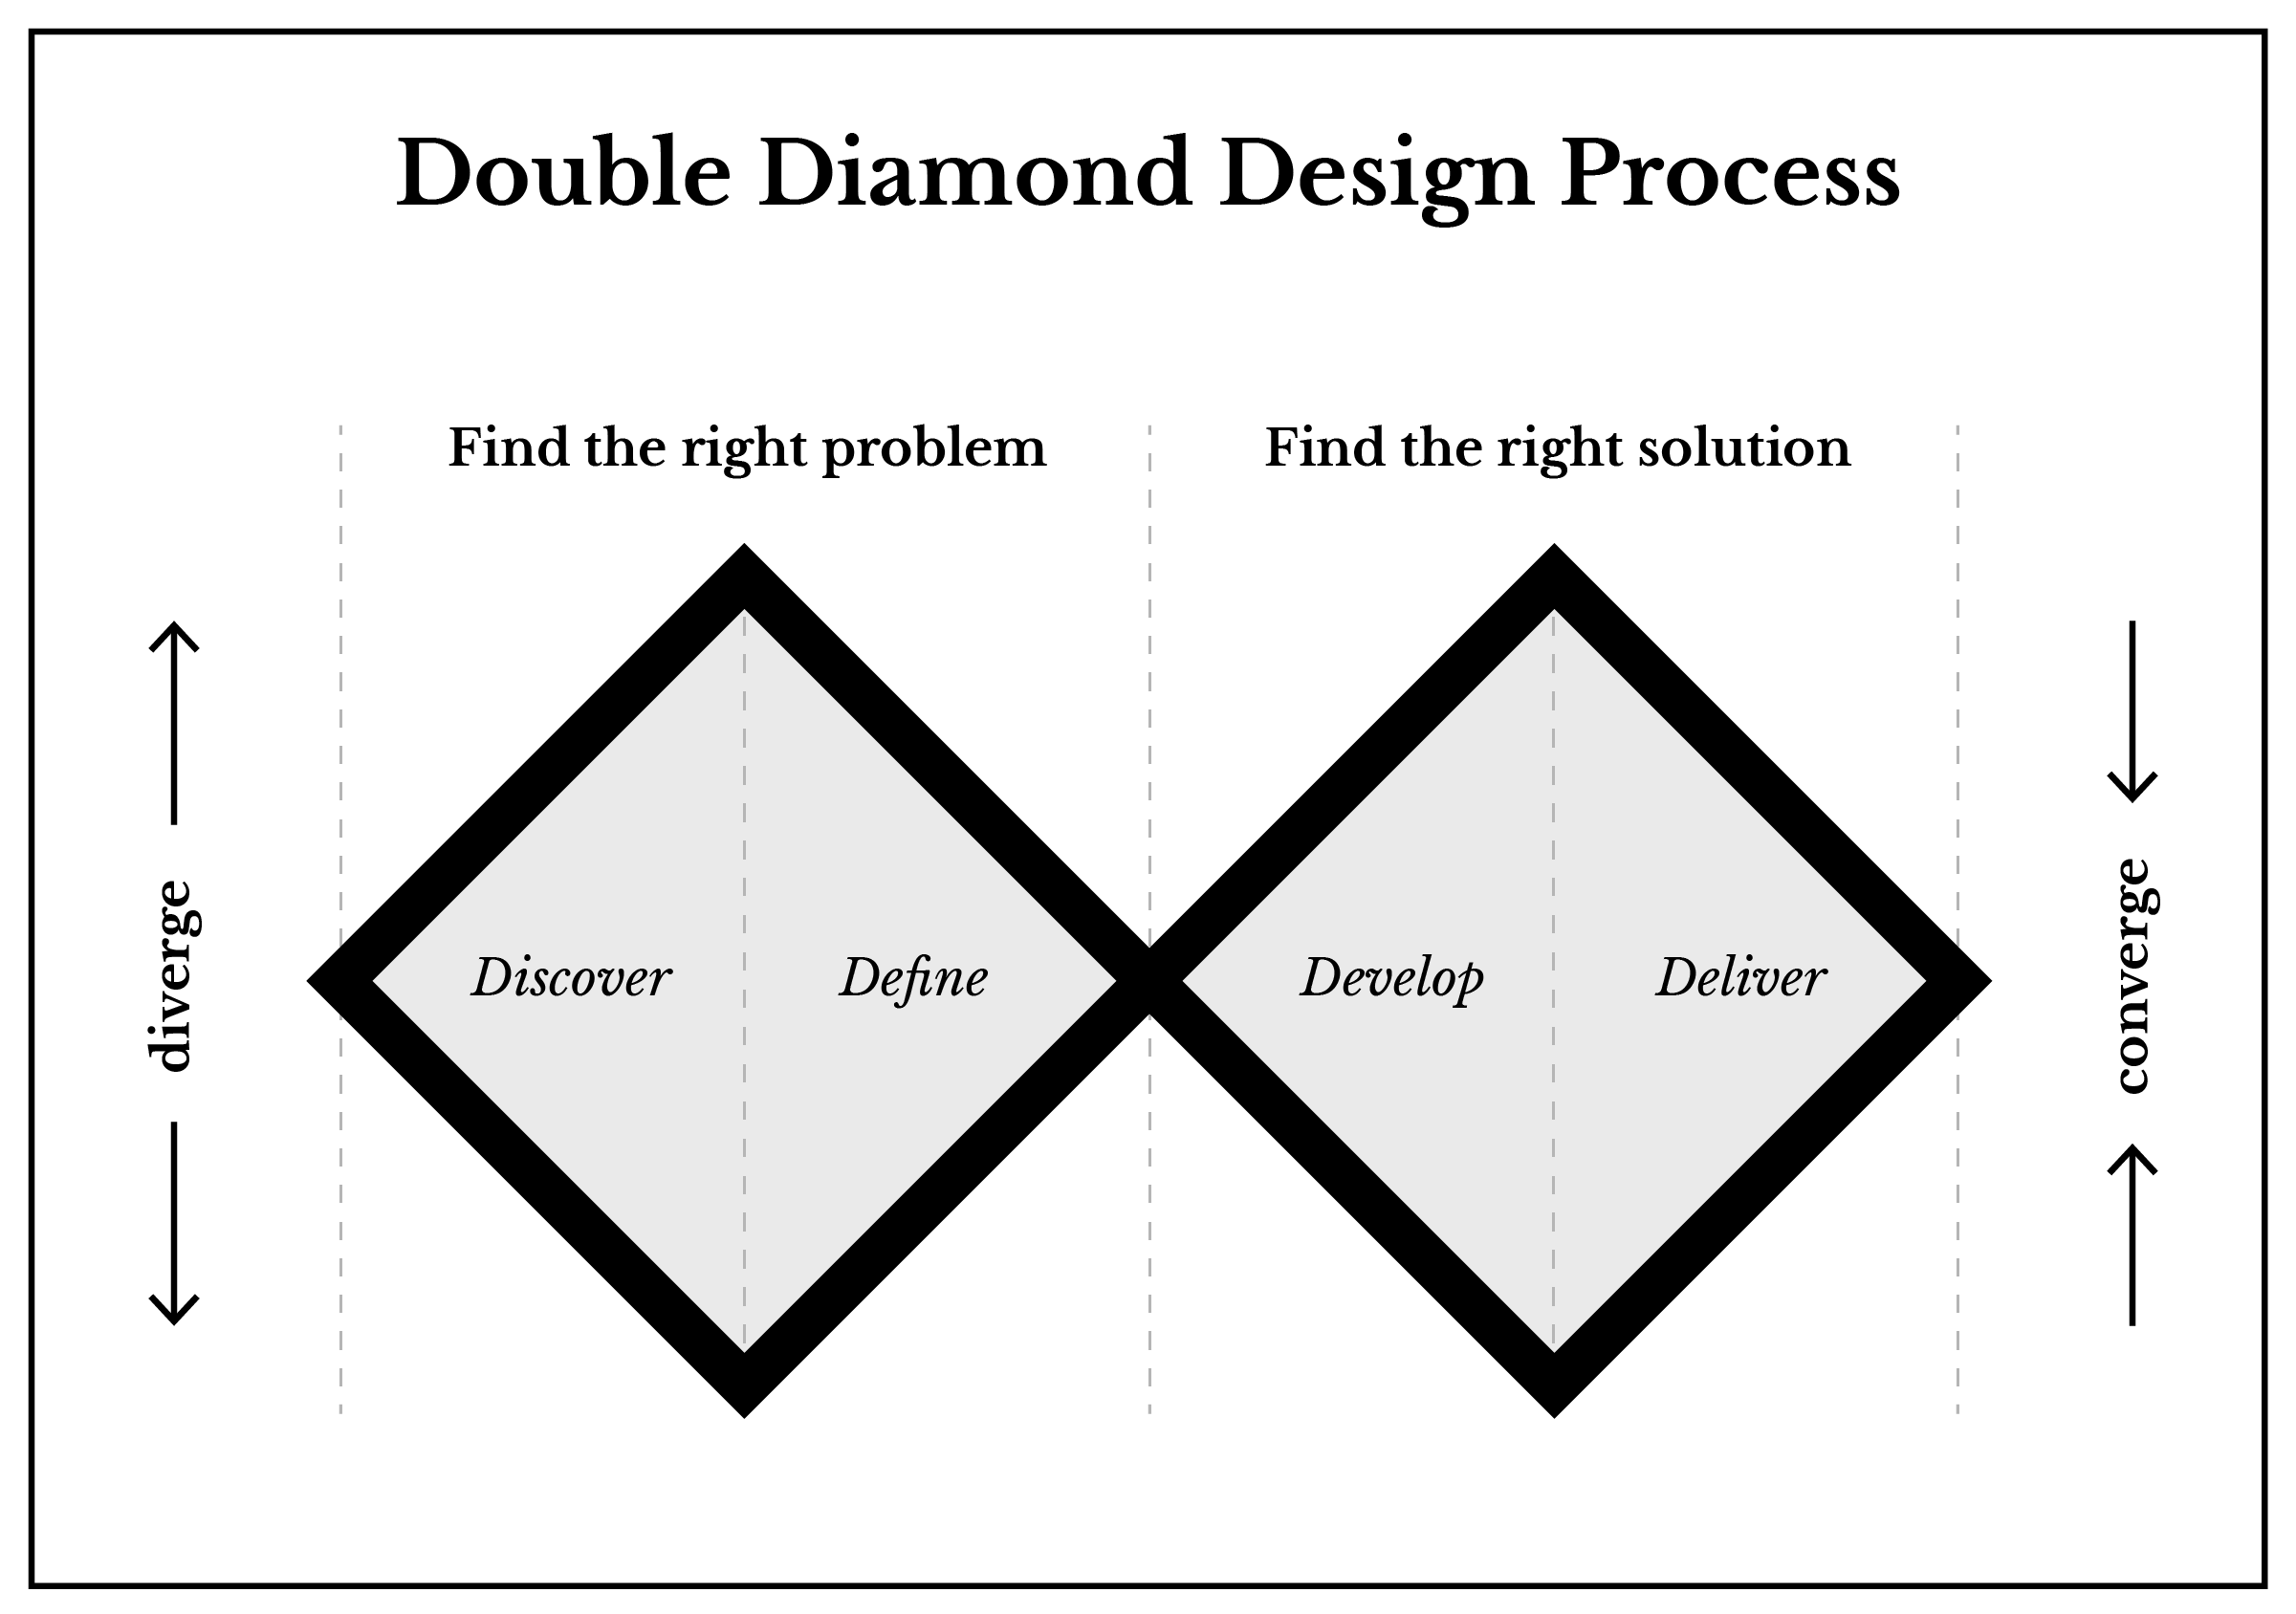 Double diamond design process diagram